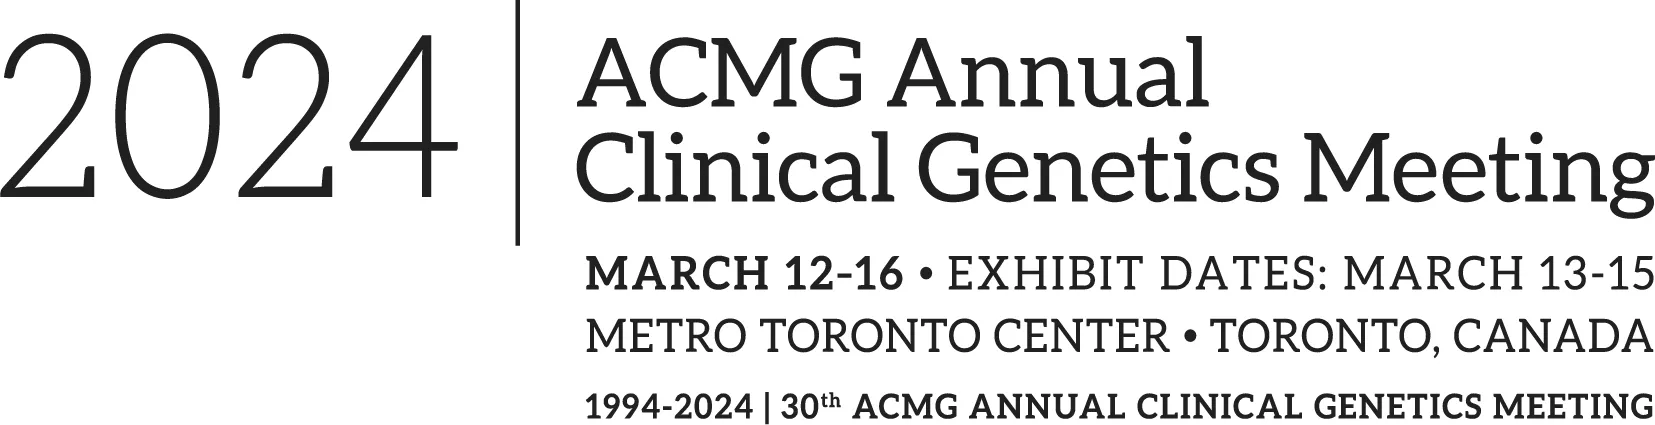 ACMG 2024 Annual Clinical Genetics Meeting